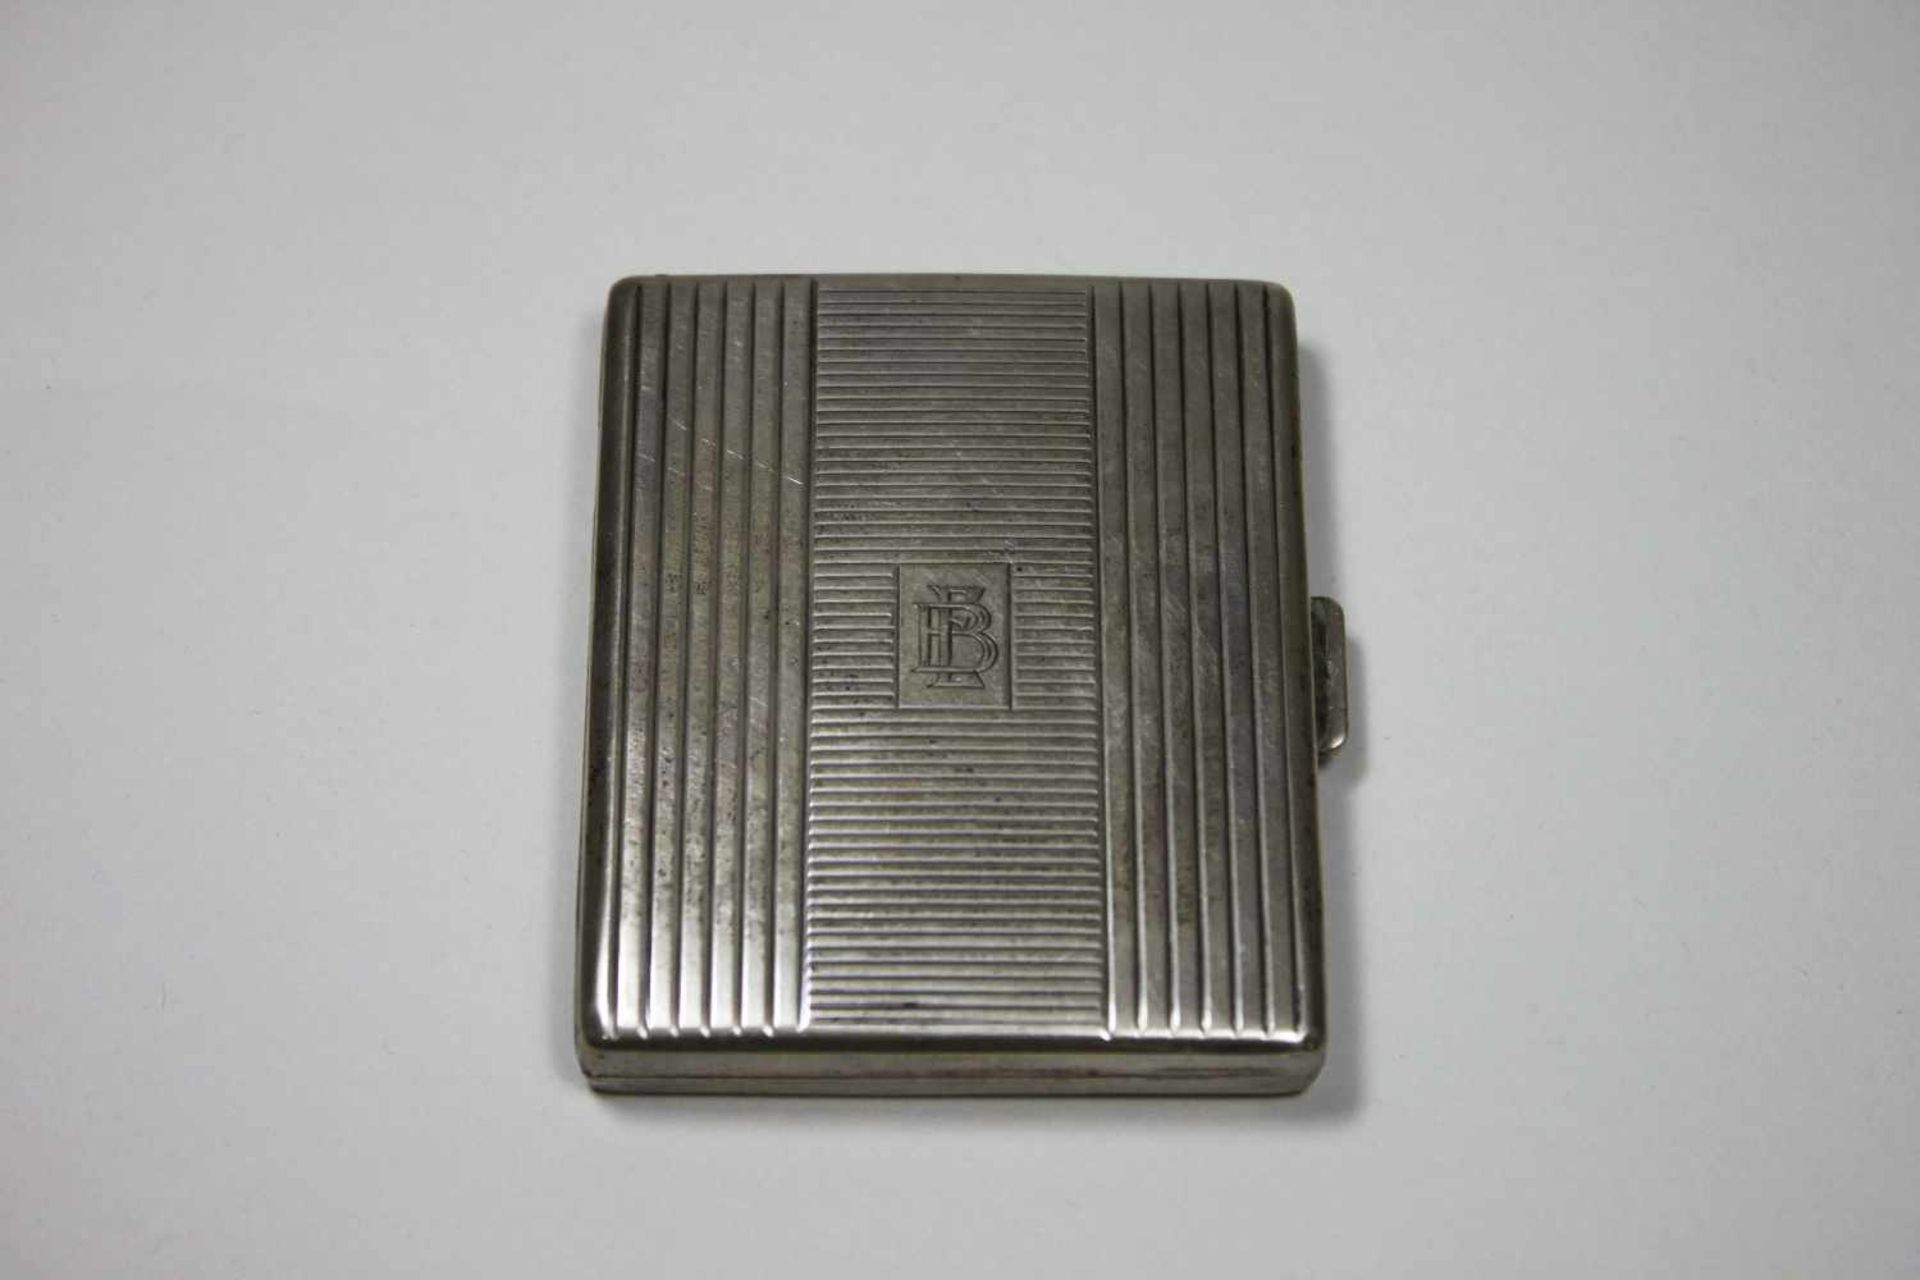 Zigarettenetui, Silber punziert, ca. 73 gr., Maße: 7,5 x 6 cm.- - -27.00 % buyer's premium on the